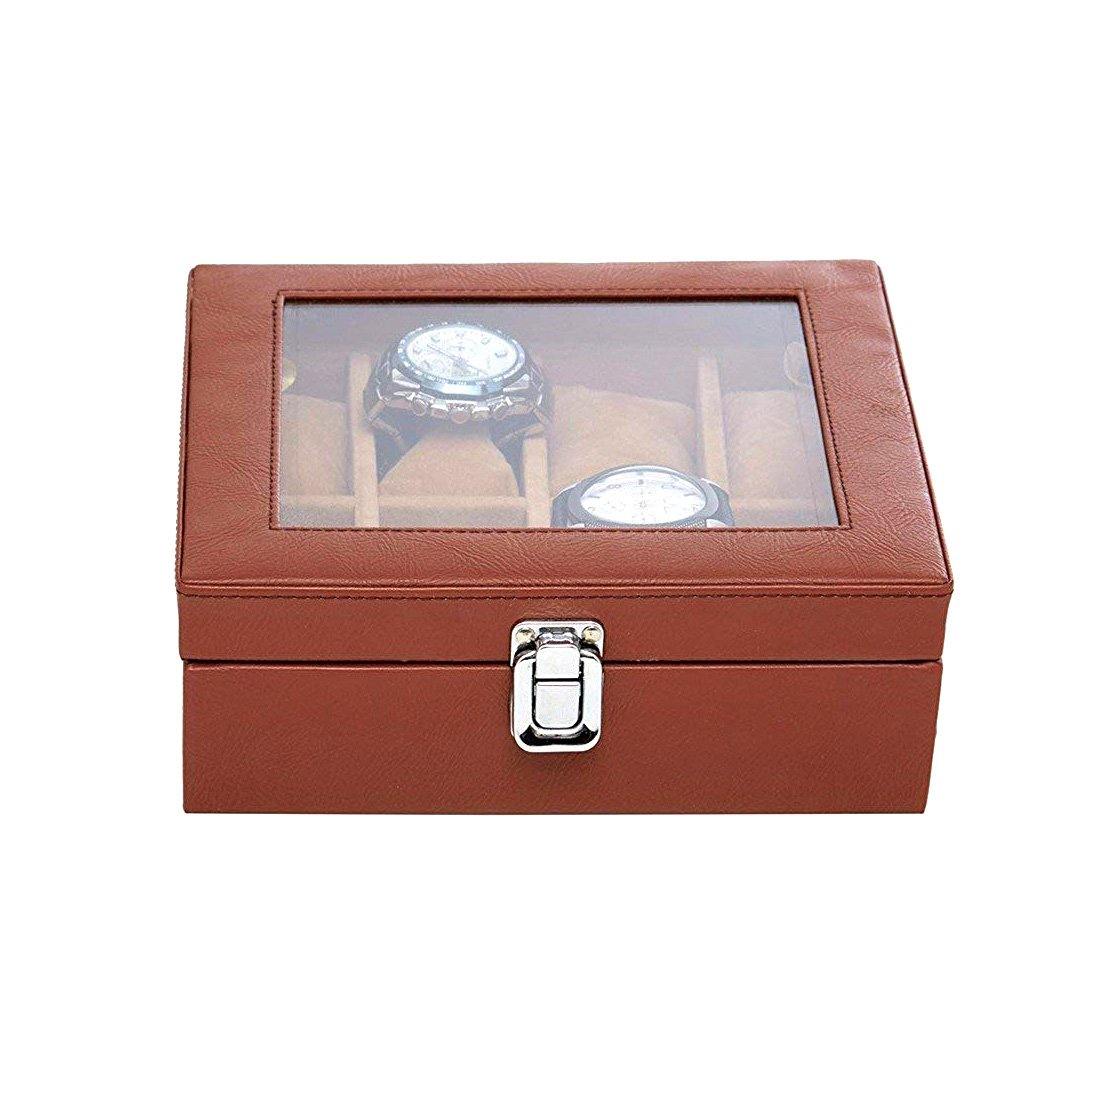 8 Slot Unisex Sleek Watch Organizer Box With Viewing Window